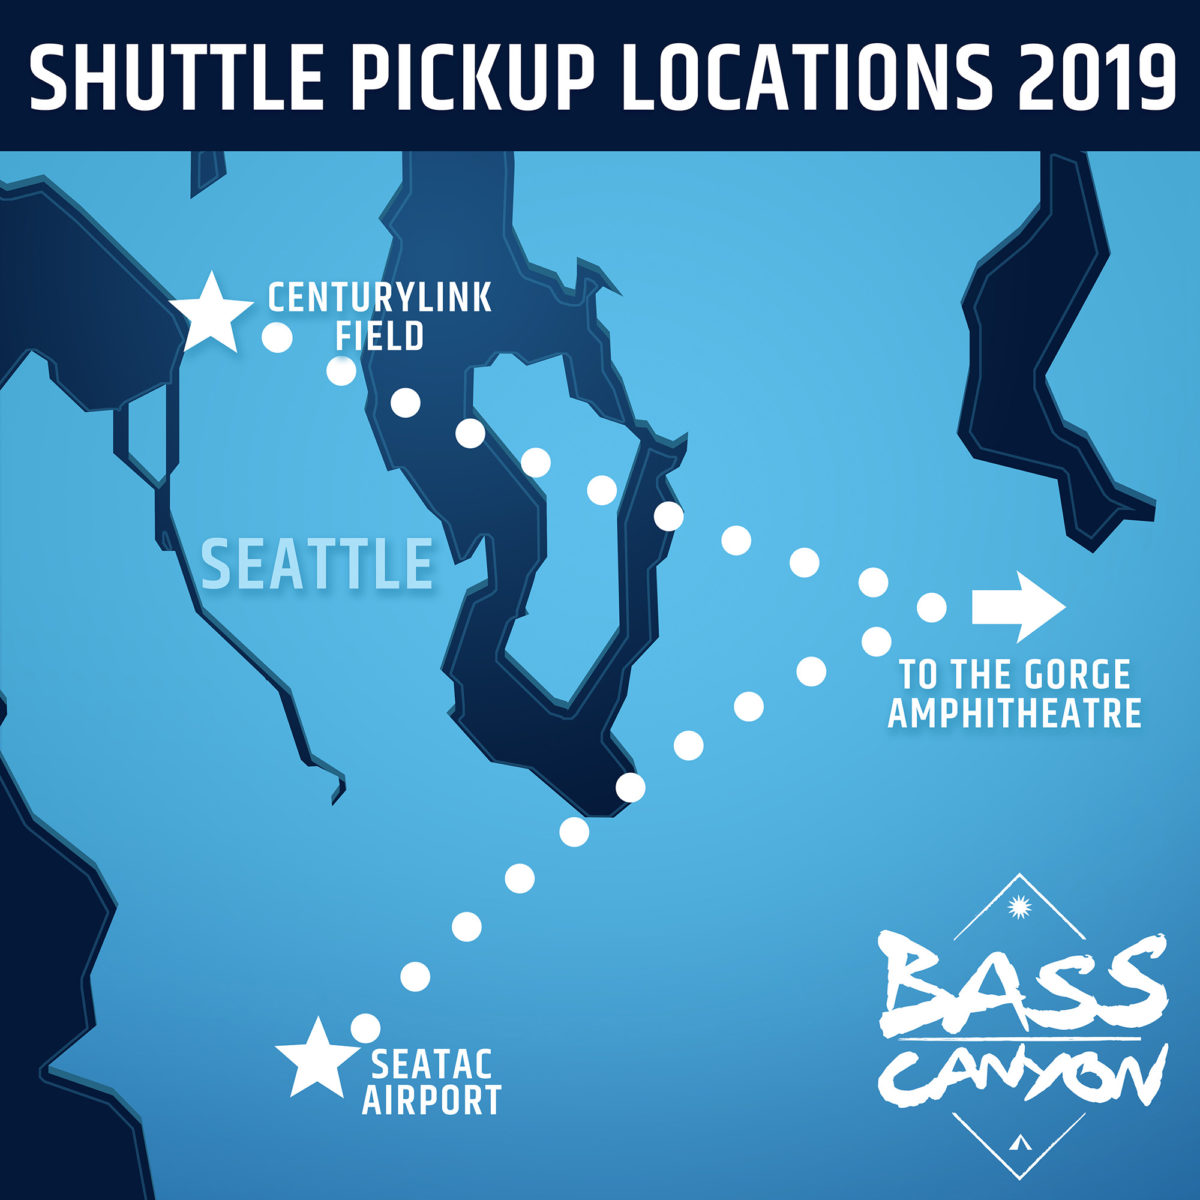 Bass Canyon Shuttle Pickup Locations